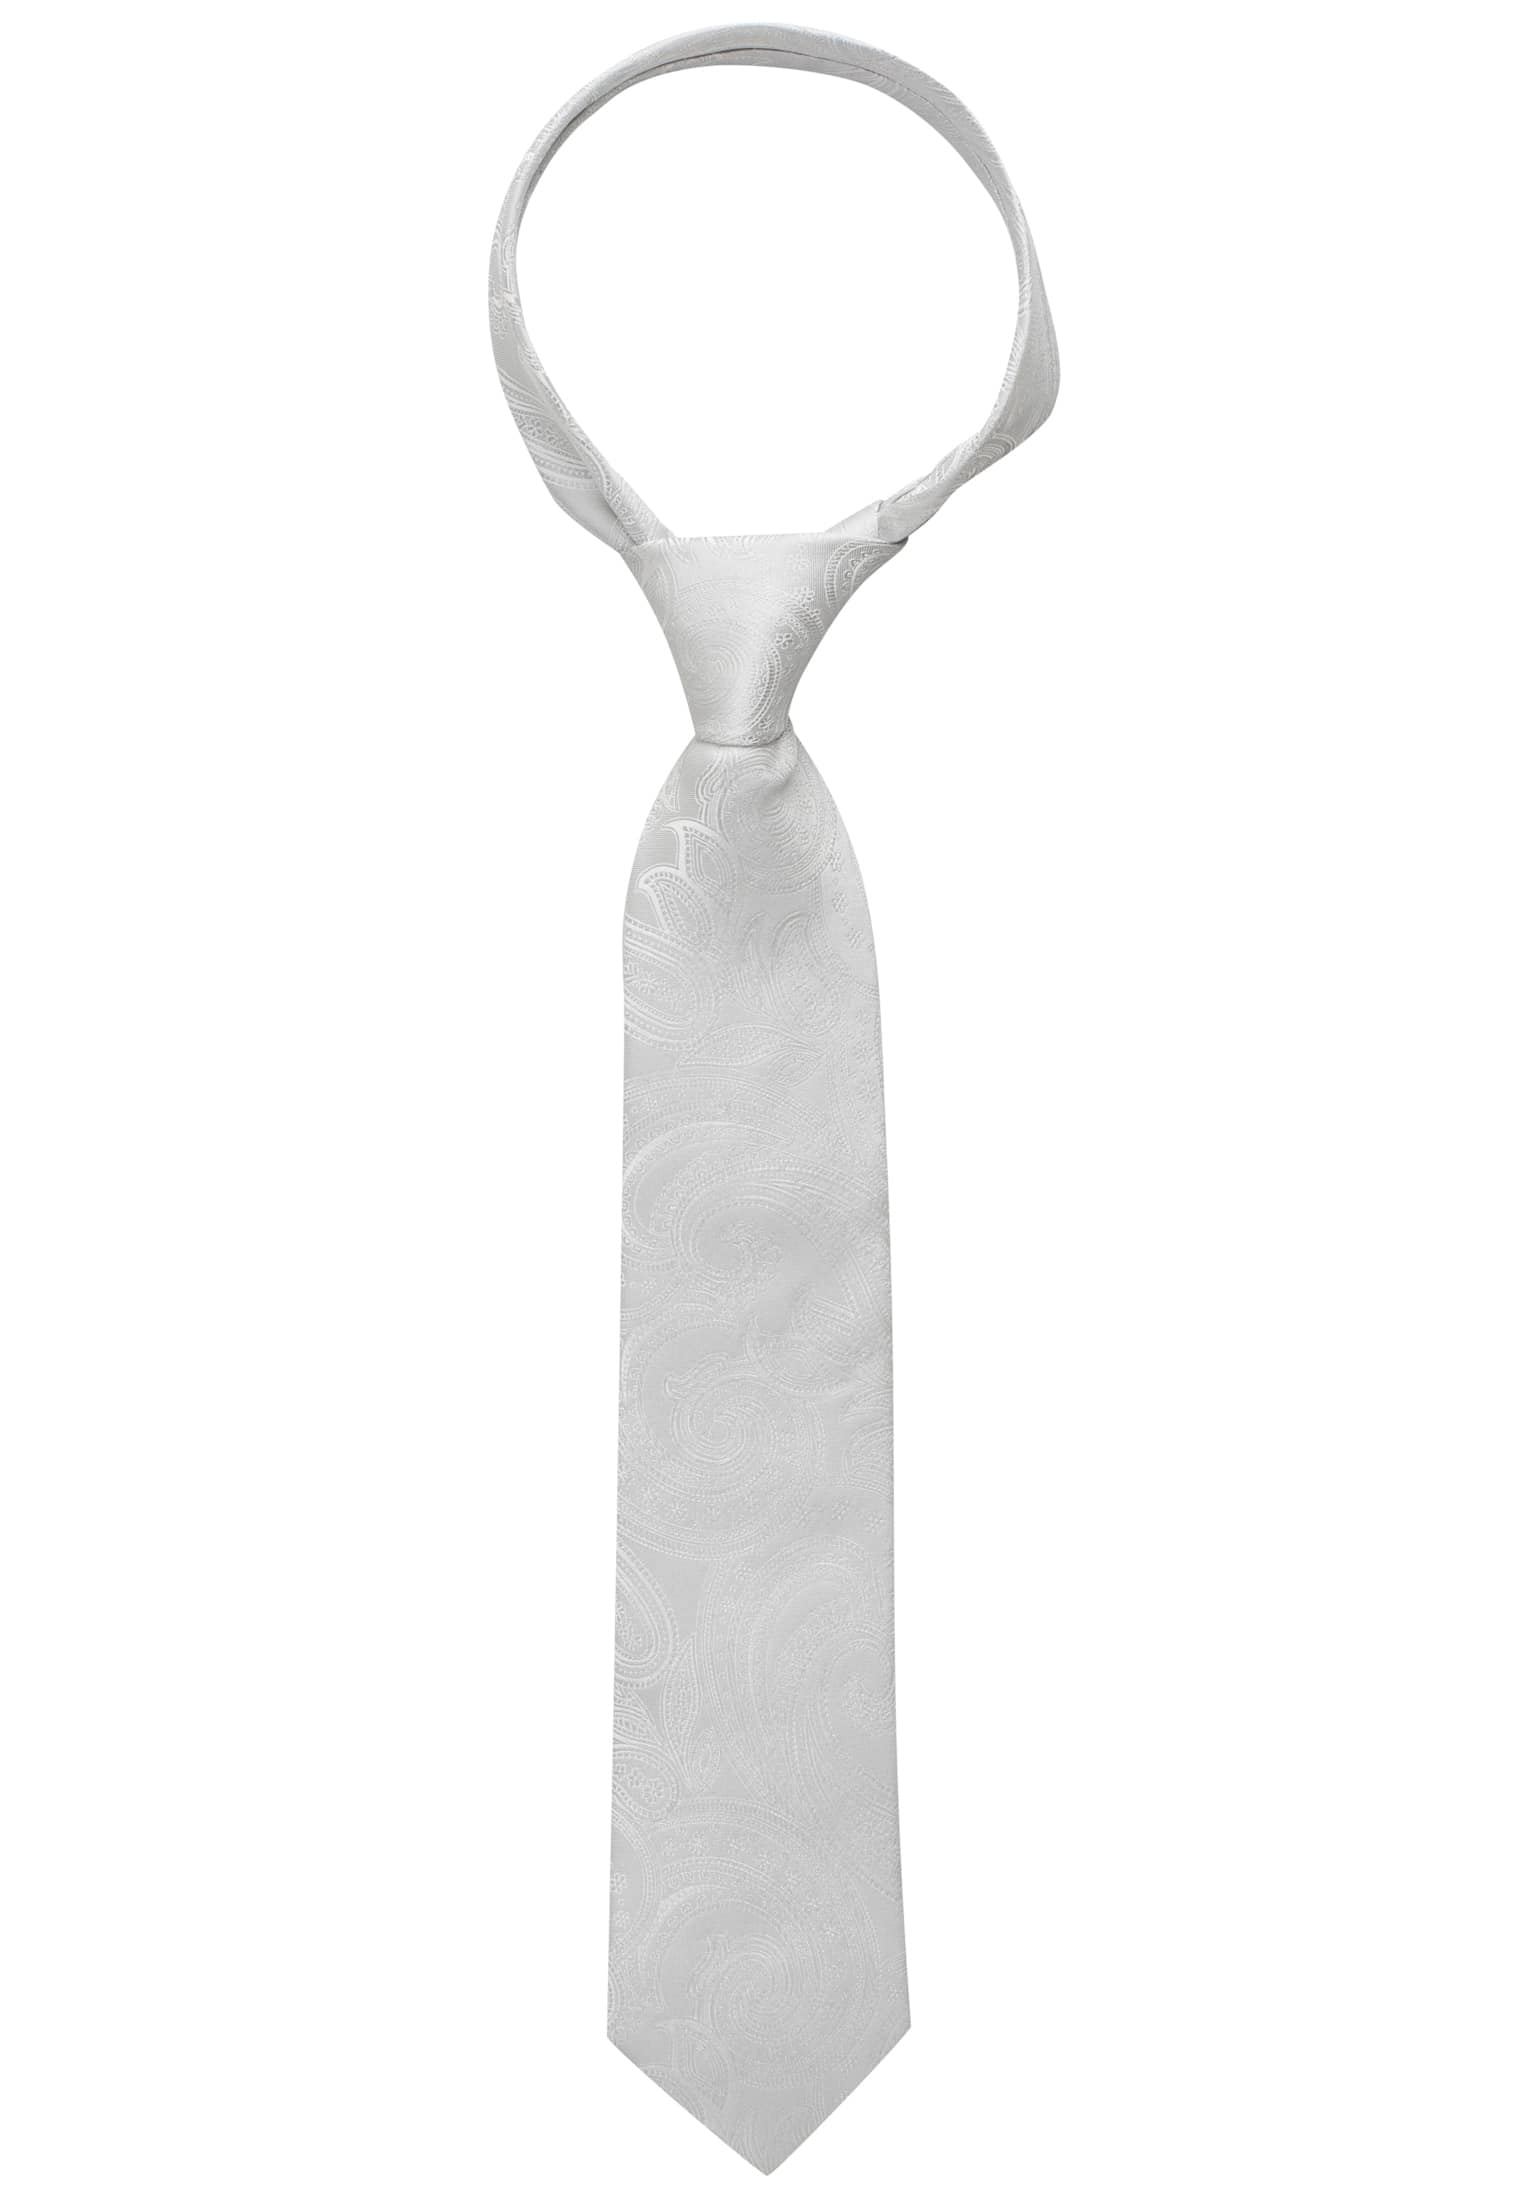 Krawatte in silber gemustert | silber | 160 | 1AC01867-03-11-160